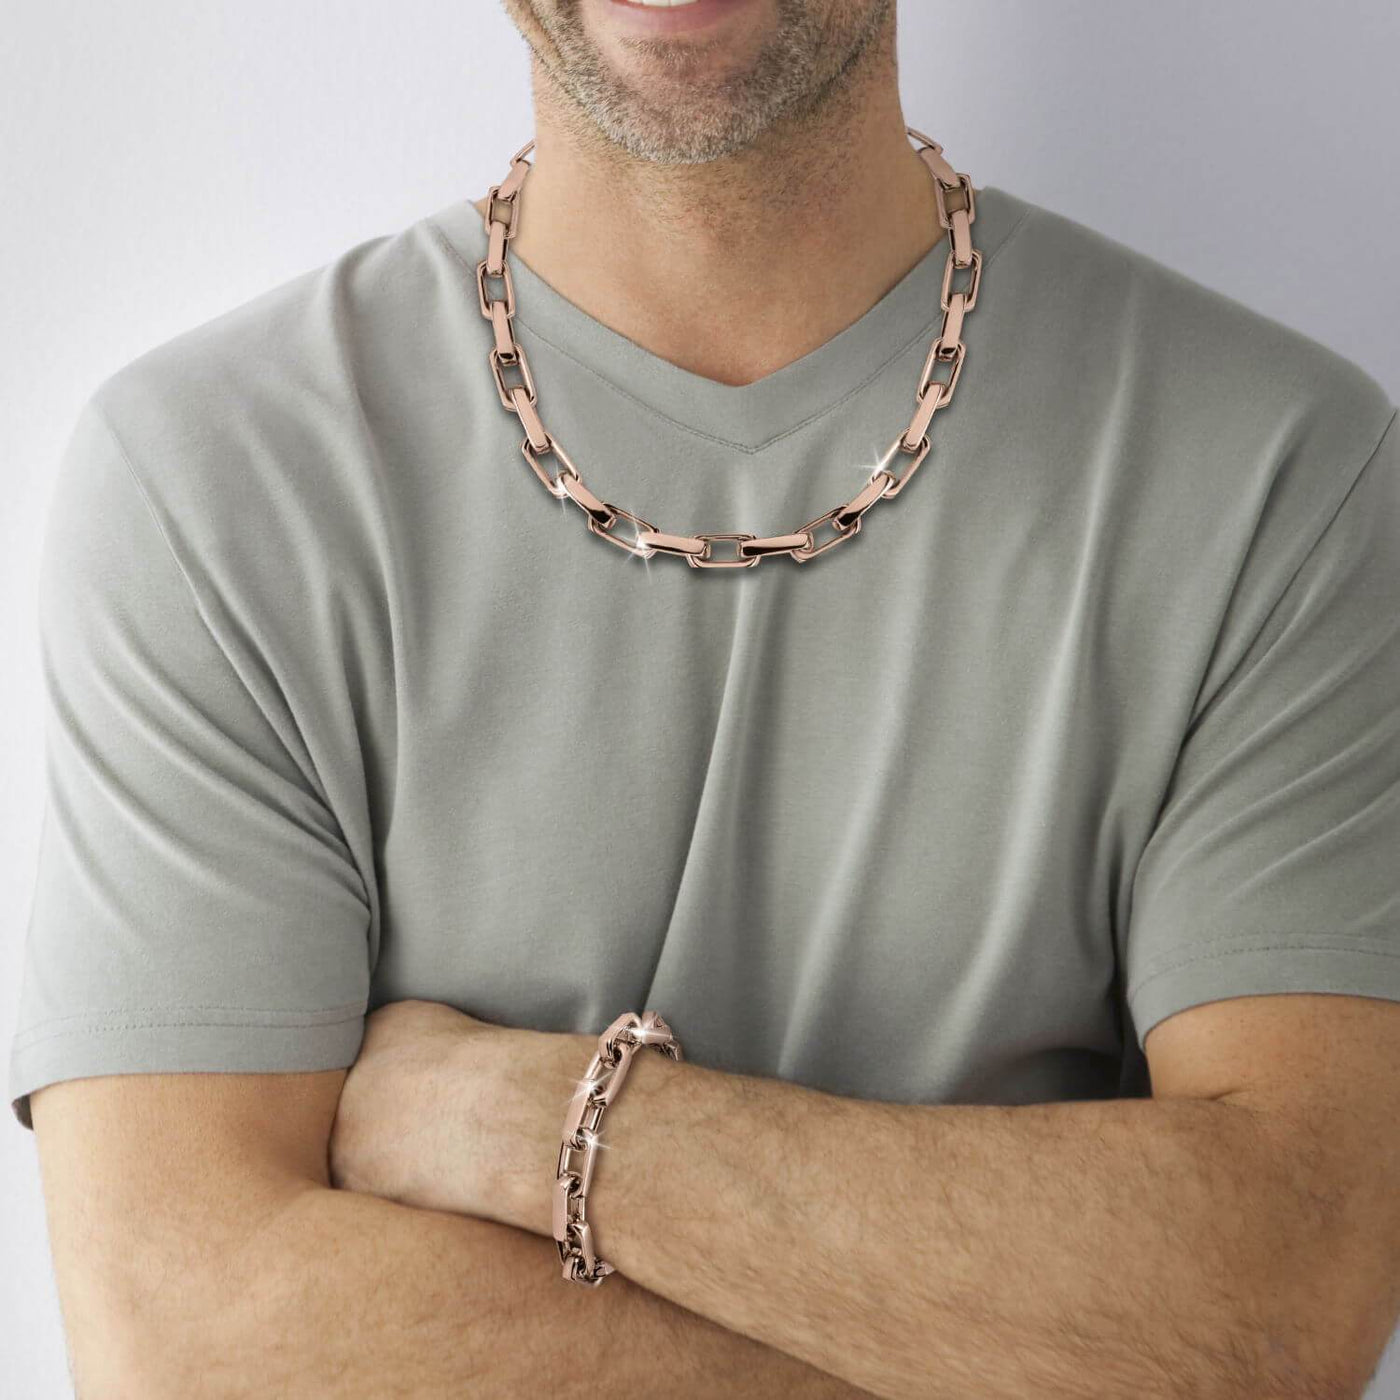 Daniel Steiger Insignia Men's Necklace